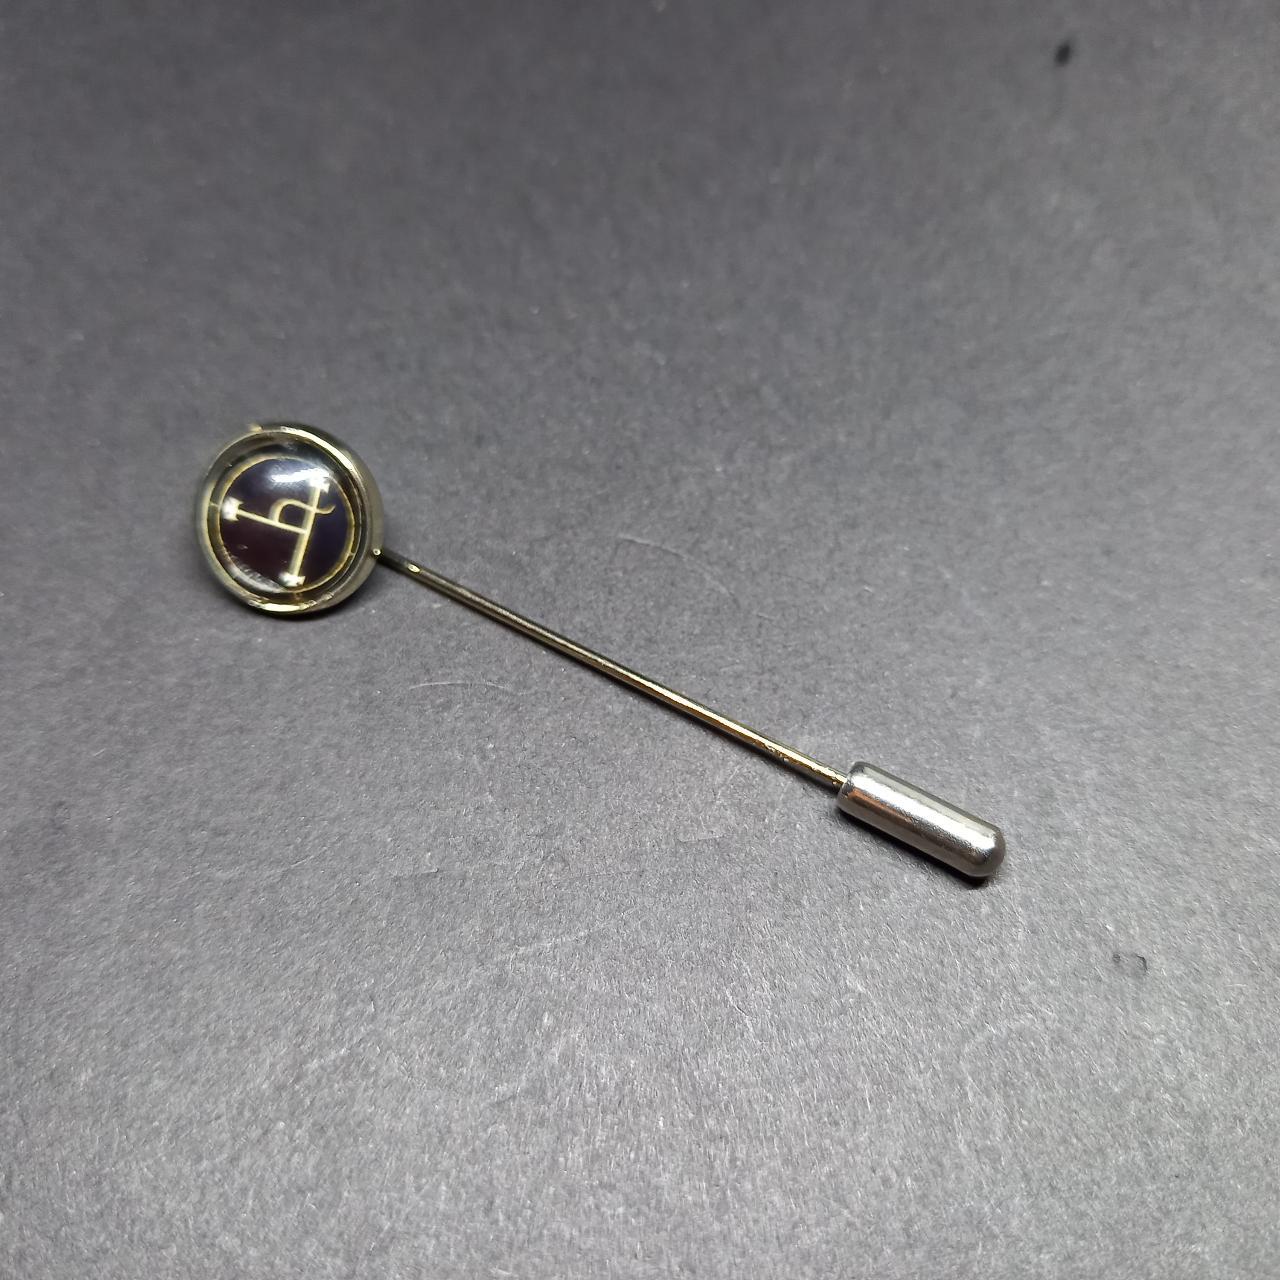 Sigil of lilith symbol 5.5 cm long lapel or tie pin... - Depop